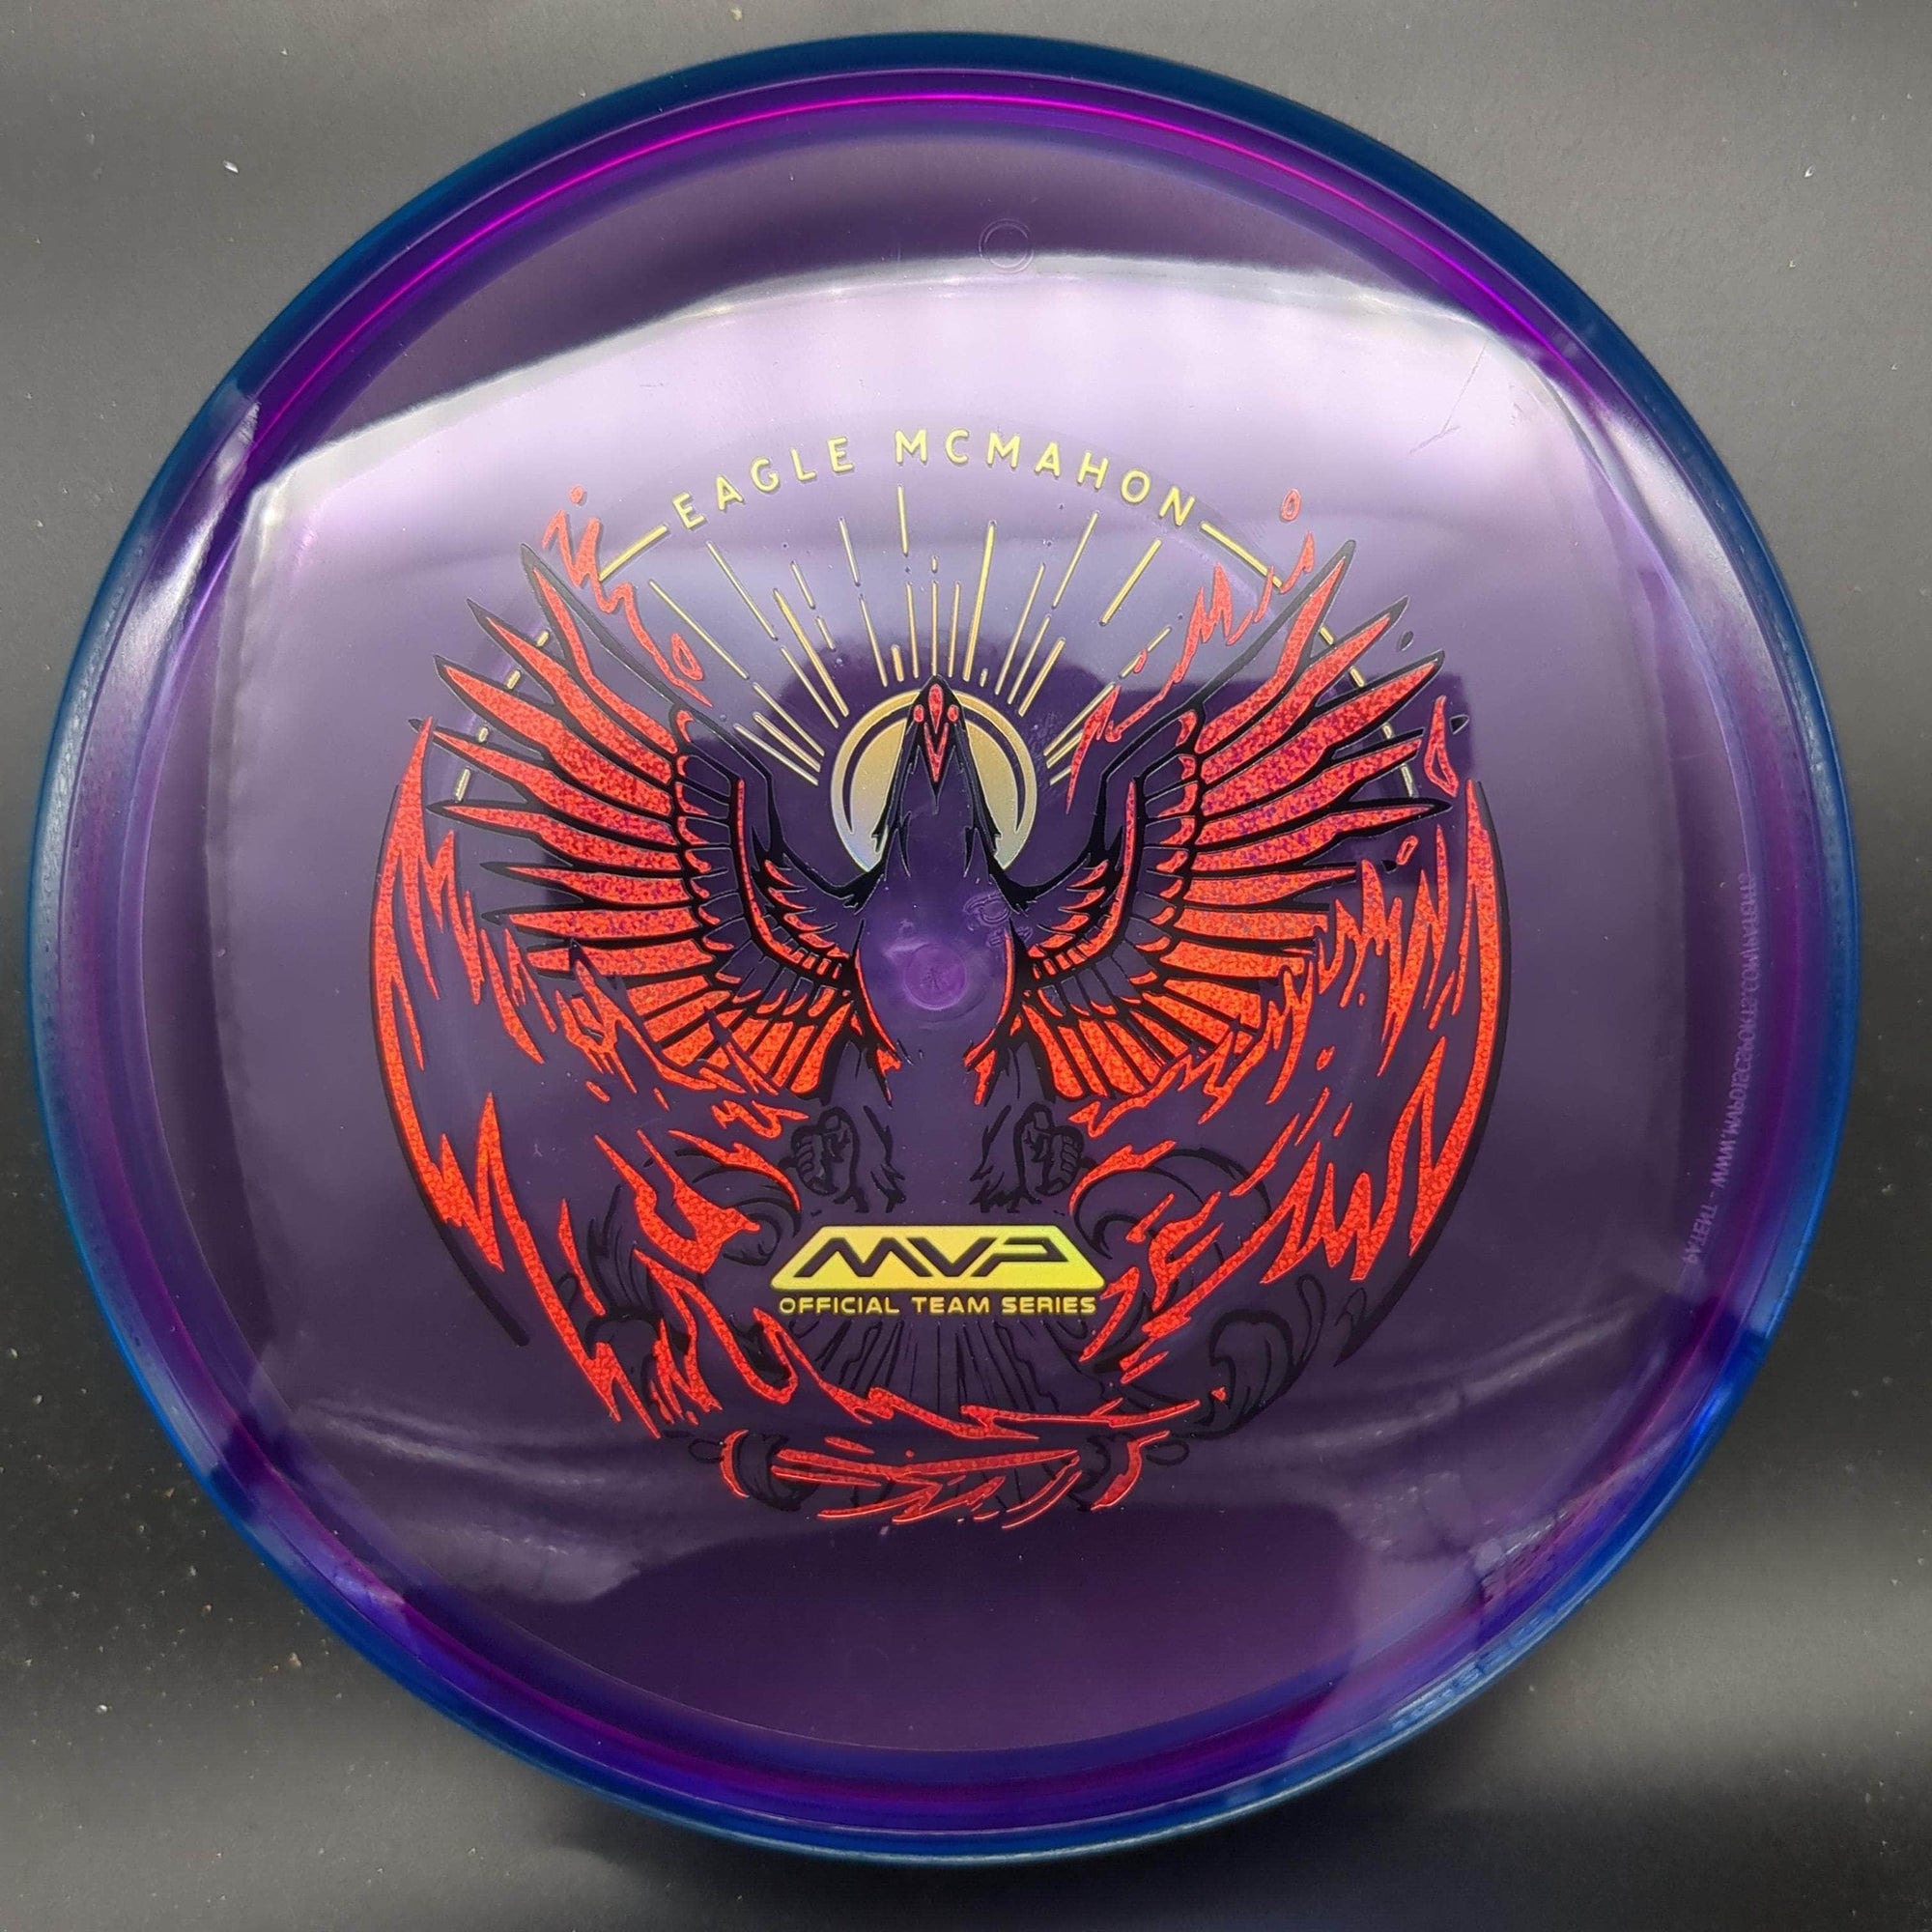 Axiom Putter Blue Rim Purple Plate 174g Envy, Prism Proton, Eagle McMahon Special Edition